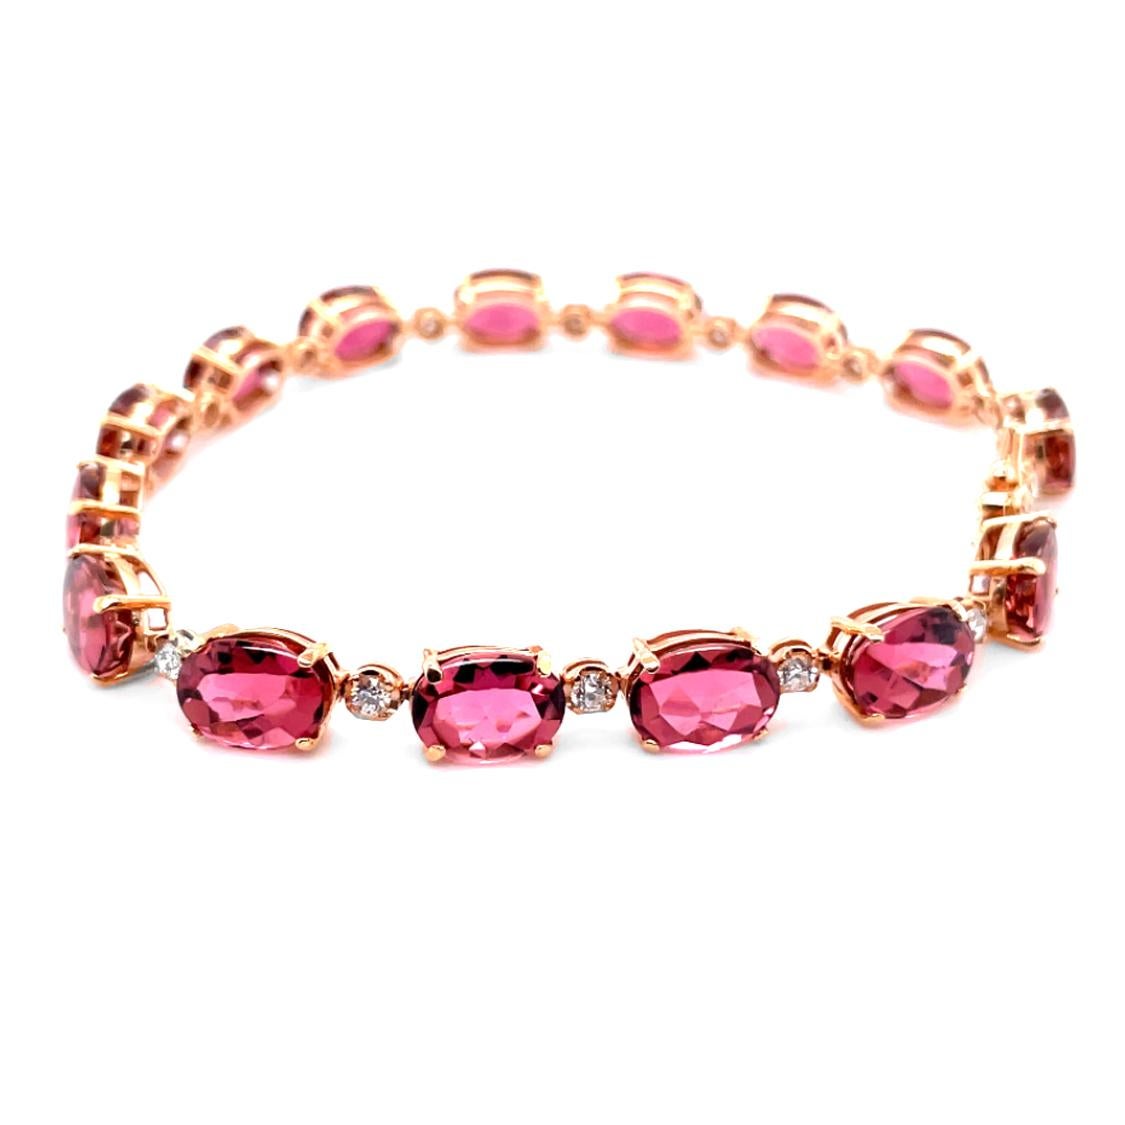 Modern 20.80 Carats Natural Pink Tourmaline and Diamond Bracelet Set in 18K Rose Gold